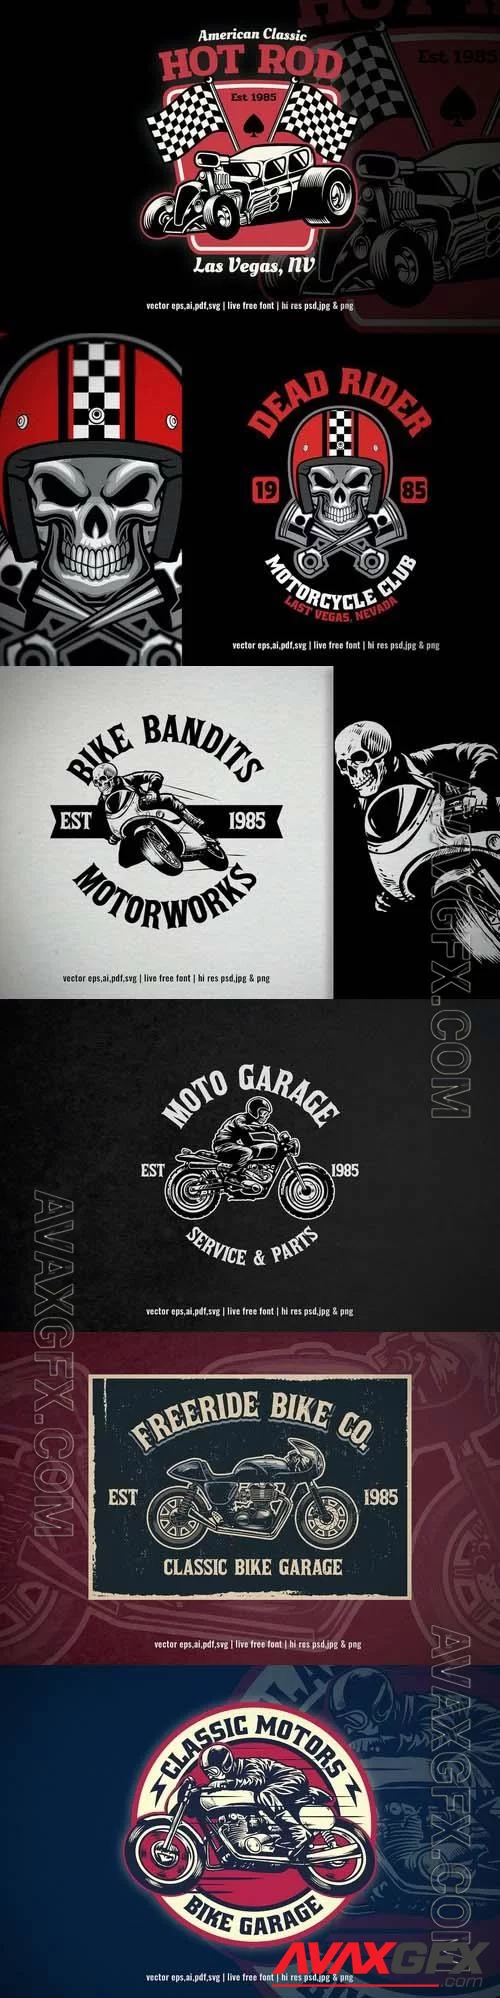 Motorcycle club rider vintage logo